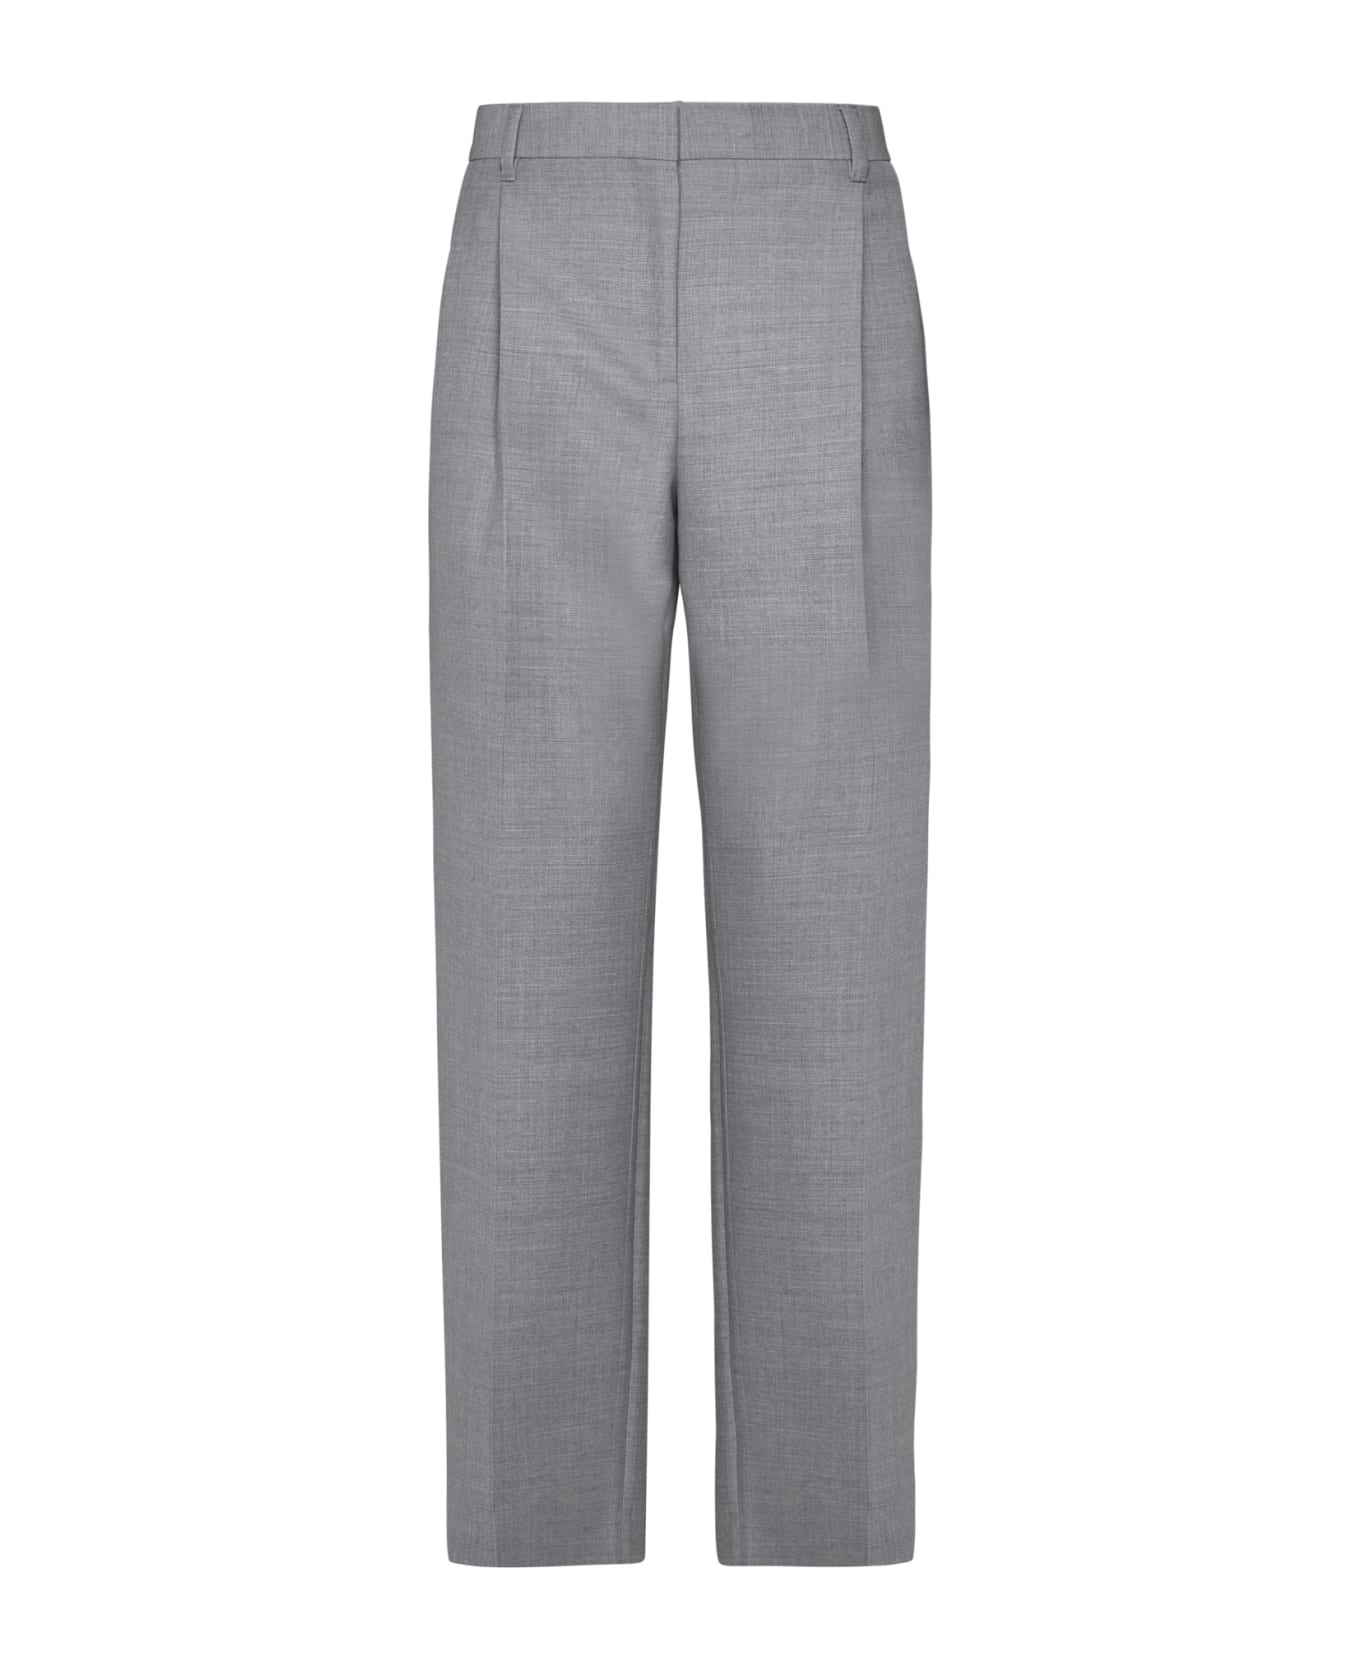 Burberry Pants - Light grey melange